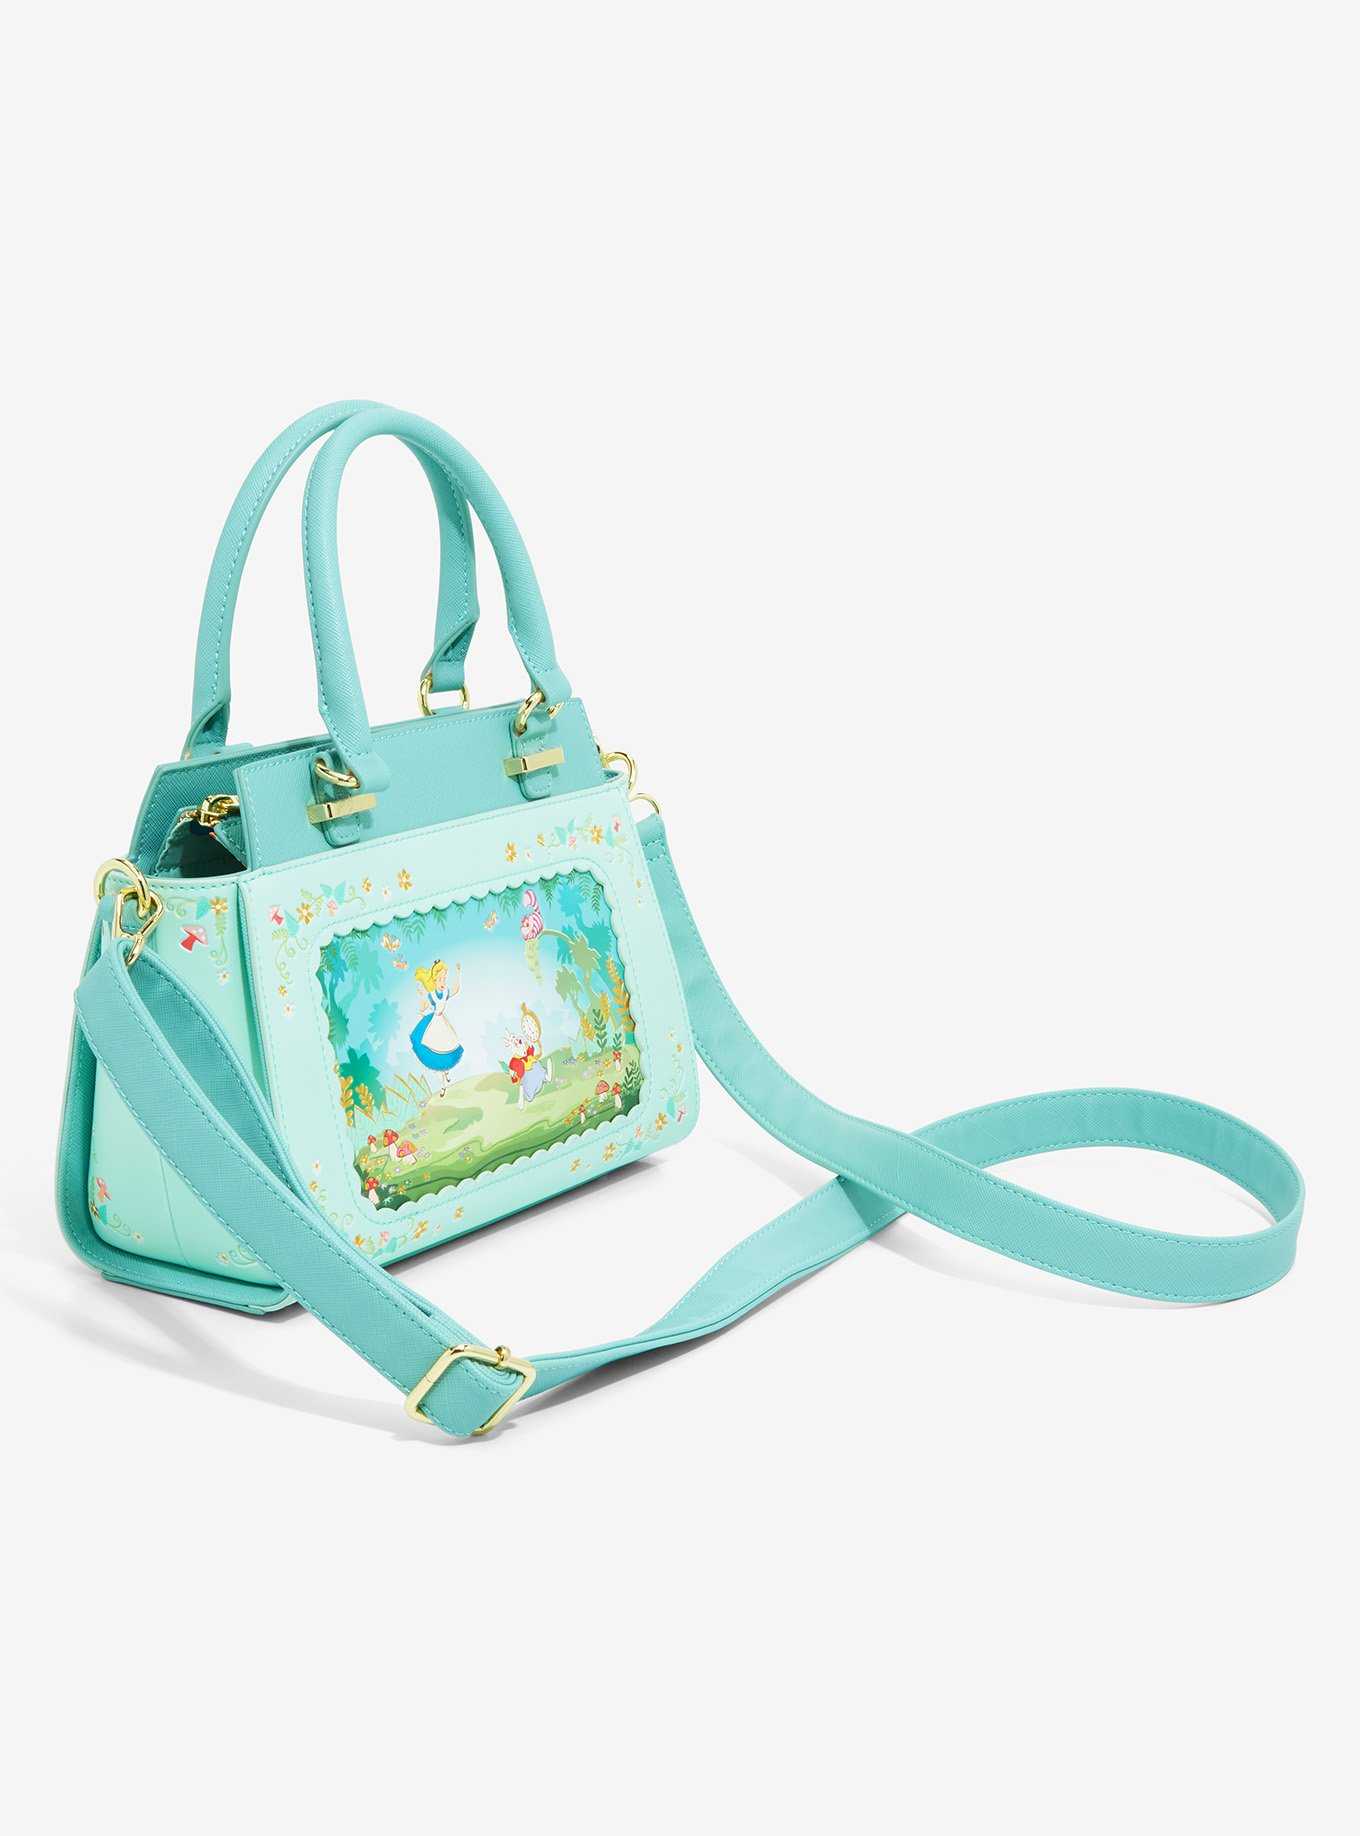 Loungefly Disney Alice in Wonderland Scenic Handbag - BoxLunch Exclusive, , hi-res